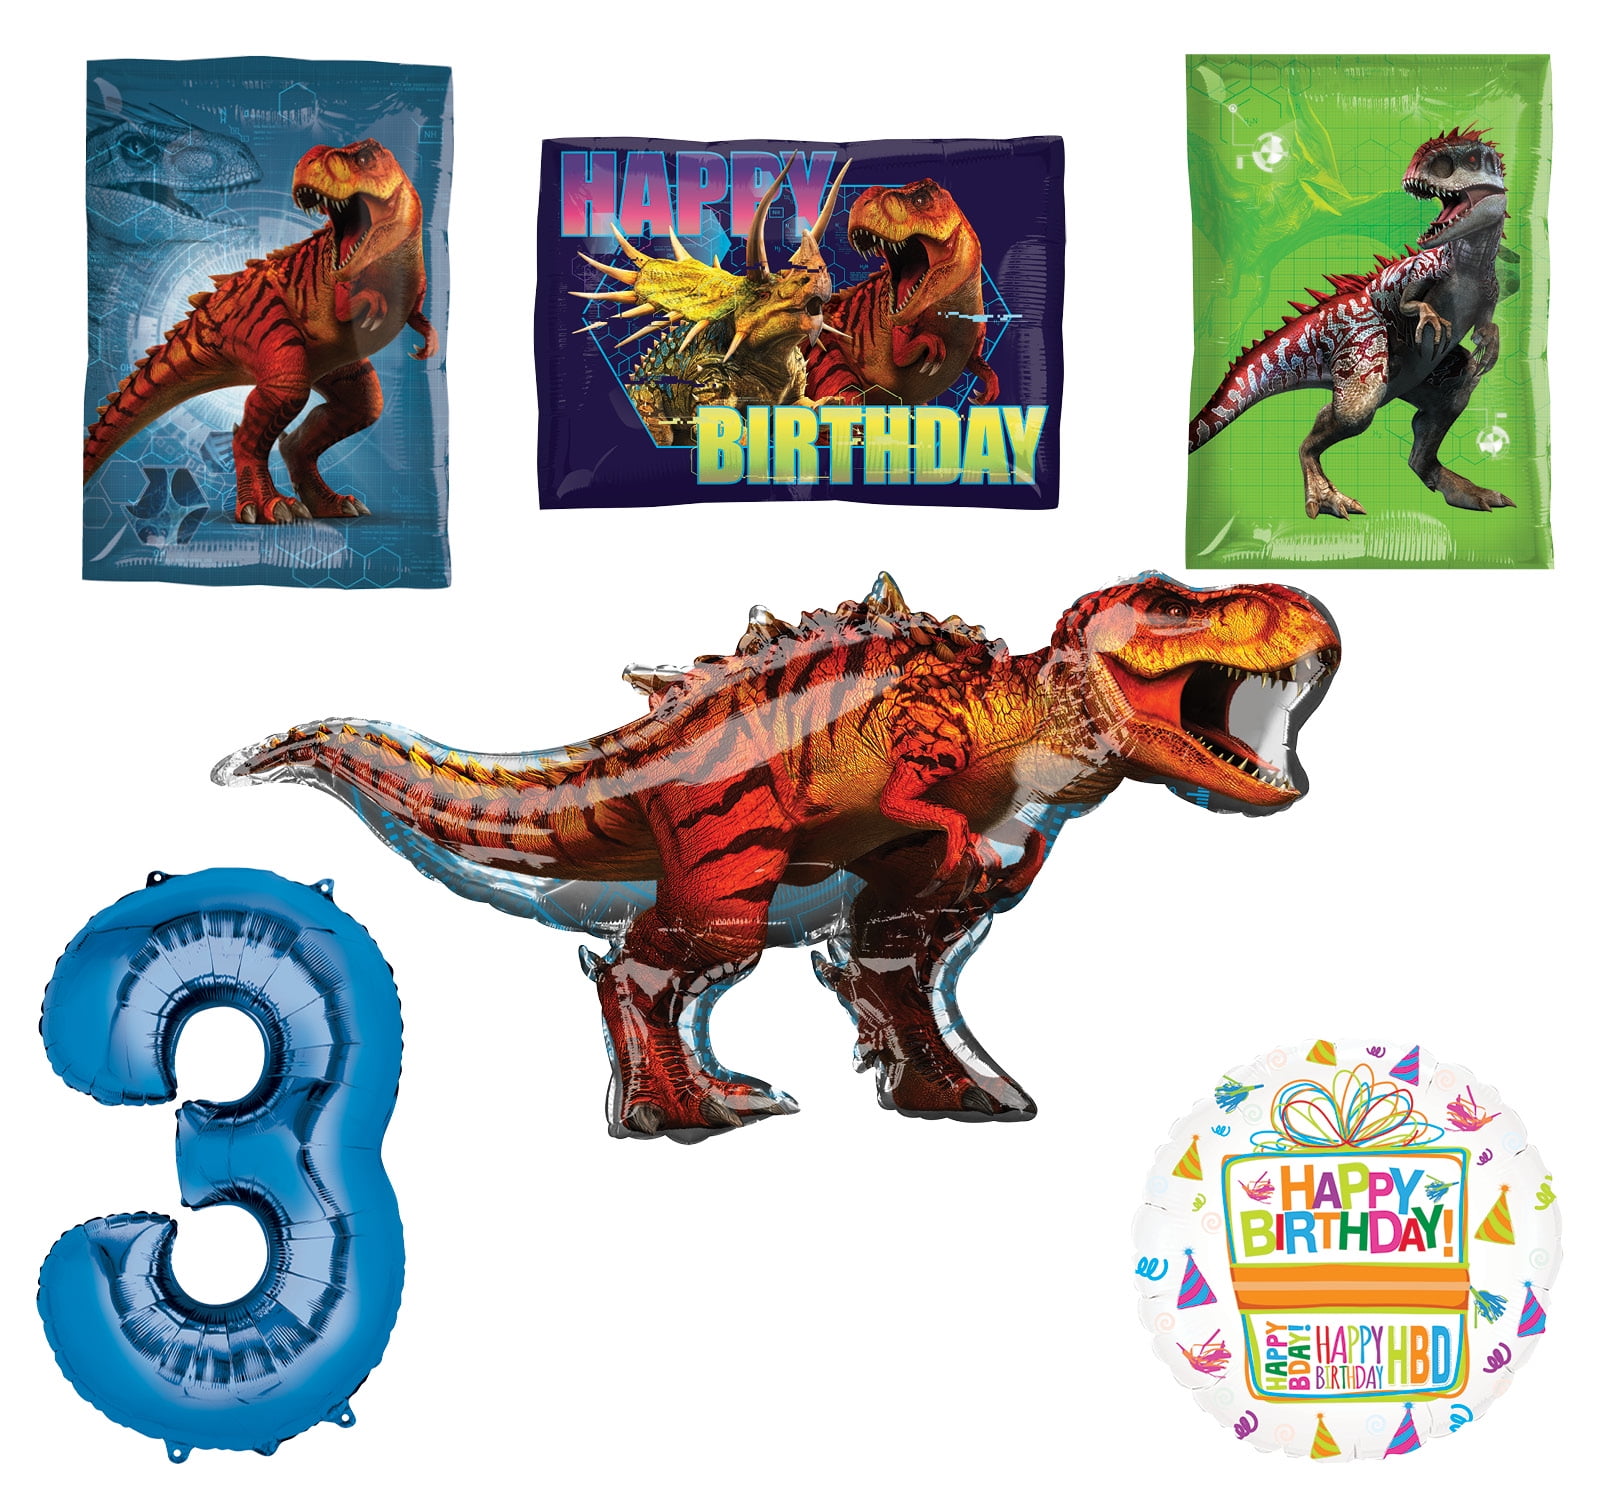 Jurassic World Dinosaur 3rd Birthday Party Supplies and Balloon Decorations 